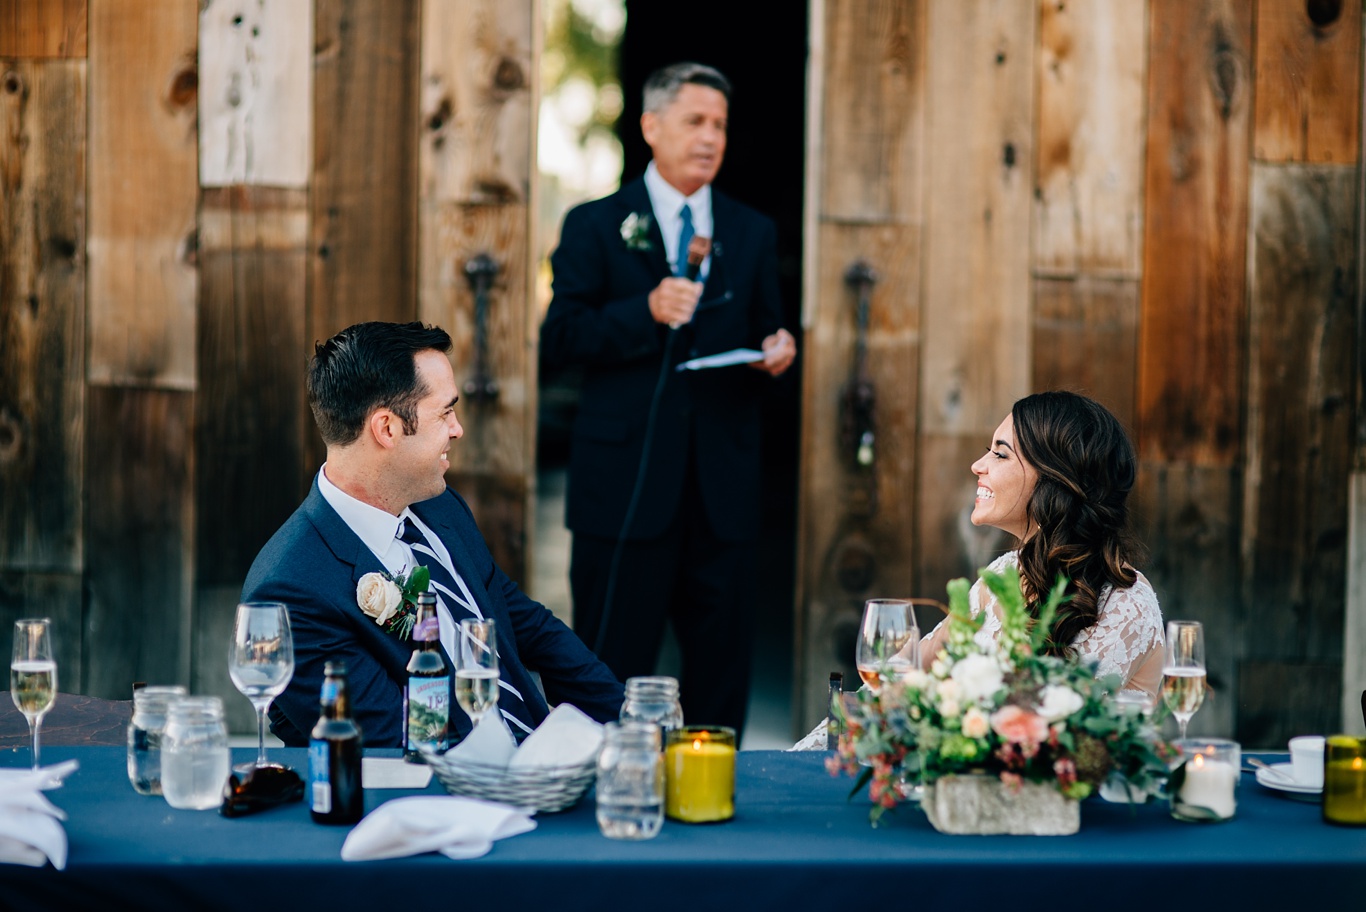 Greengate Ranch Wedding Photos